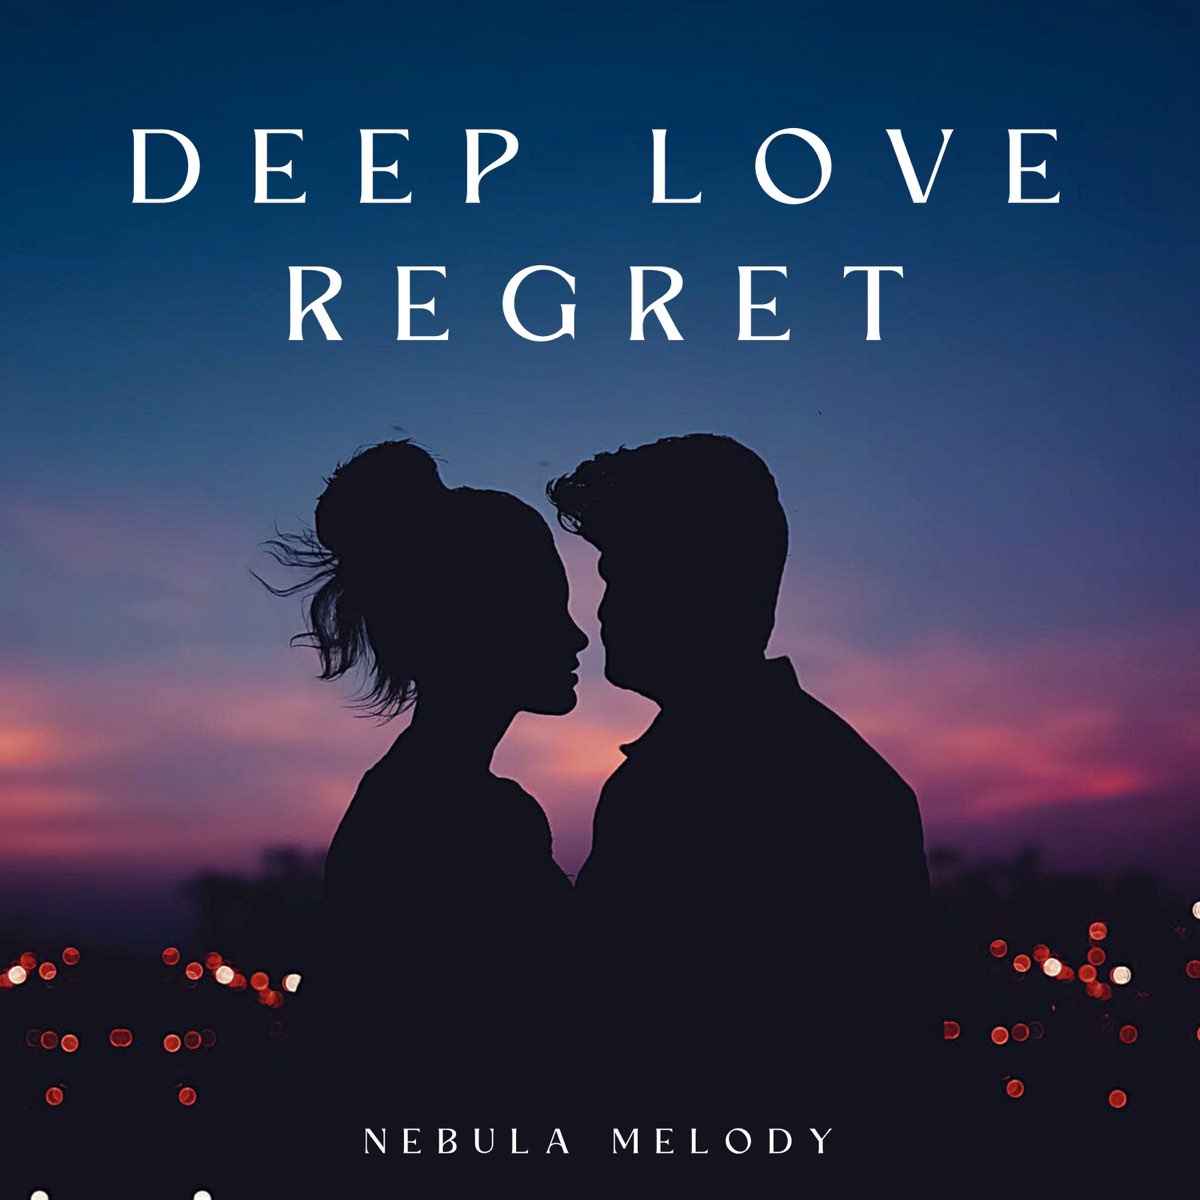 ‎Deep Love Regret - Album by Nebula Melody - Apple Music